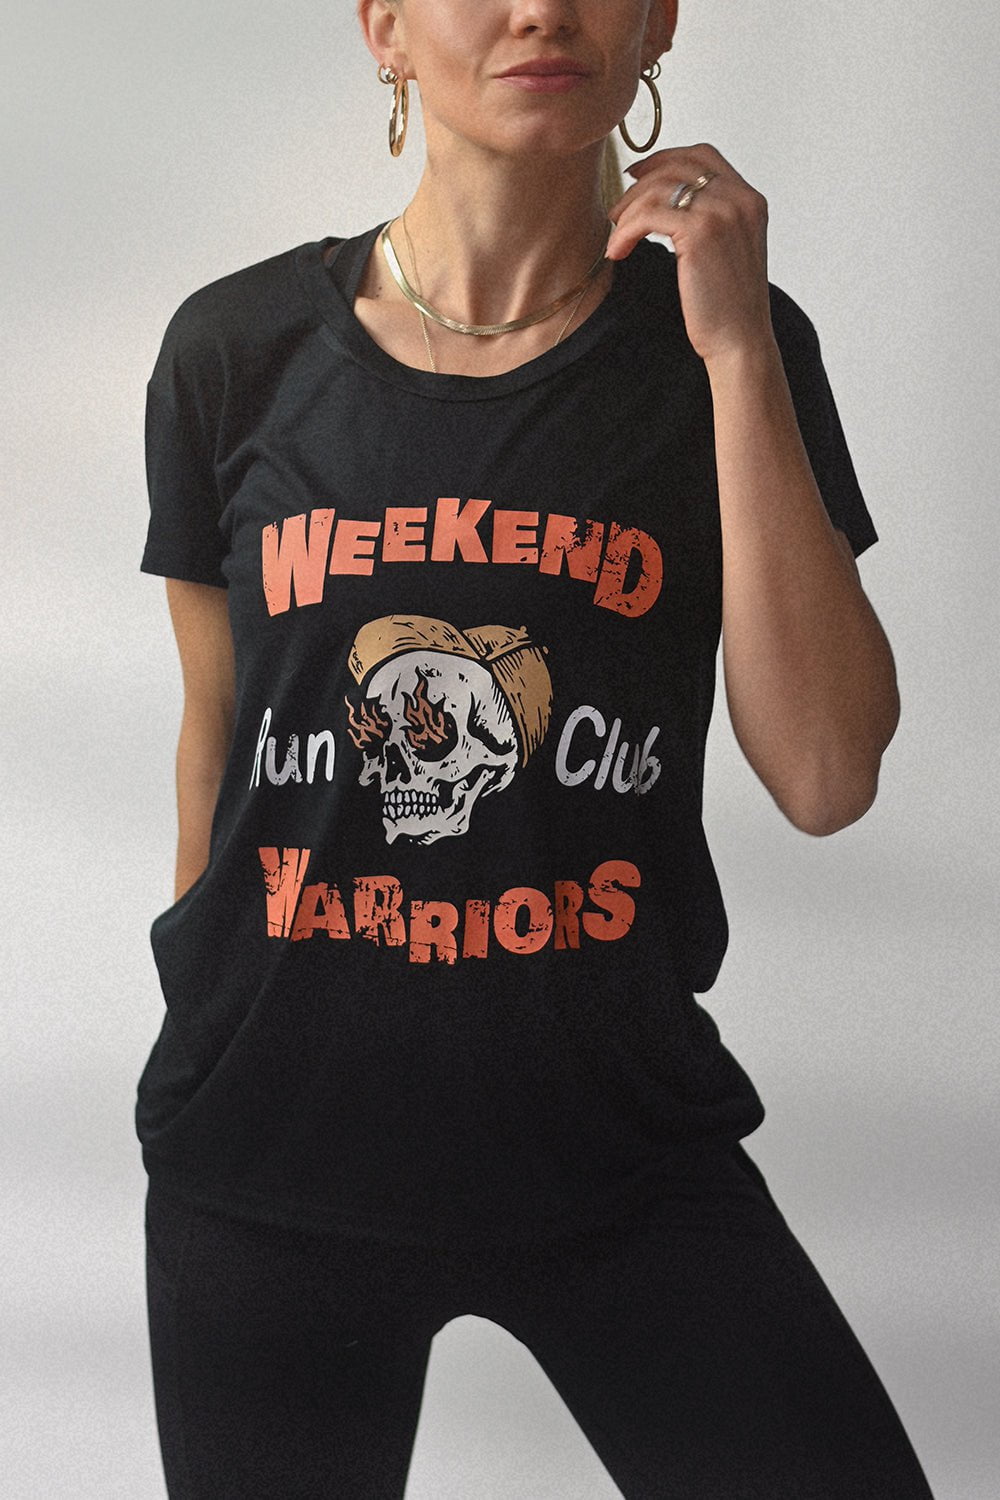 Sarah Marie Design Studio Women's Tee Weekend Warriors Run Club T-shirt